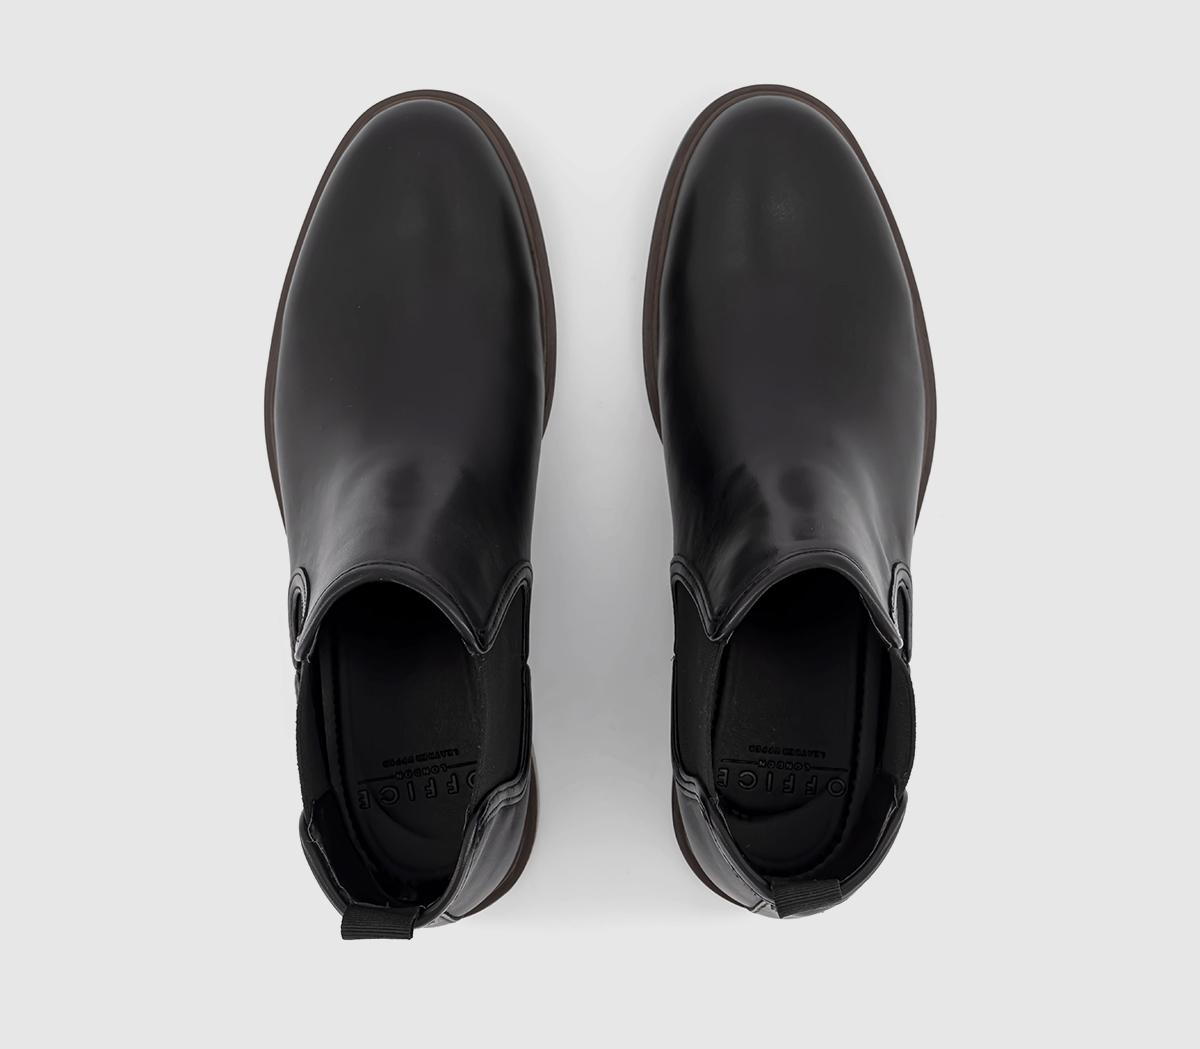 OFFICE Brockhurst Smart Chelsea Boots Black Leather - Men’s Boots